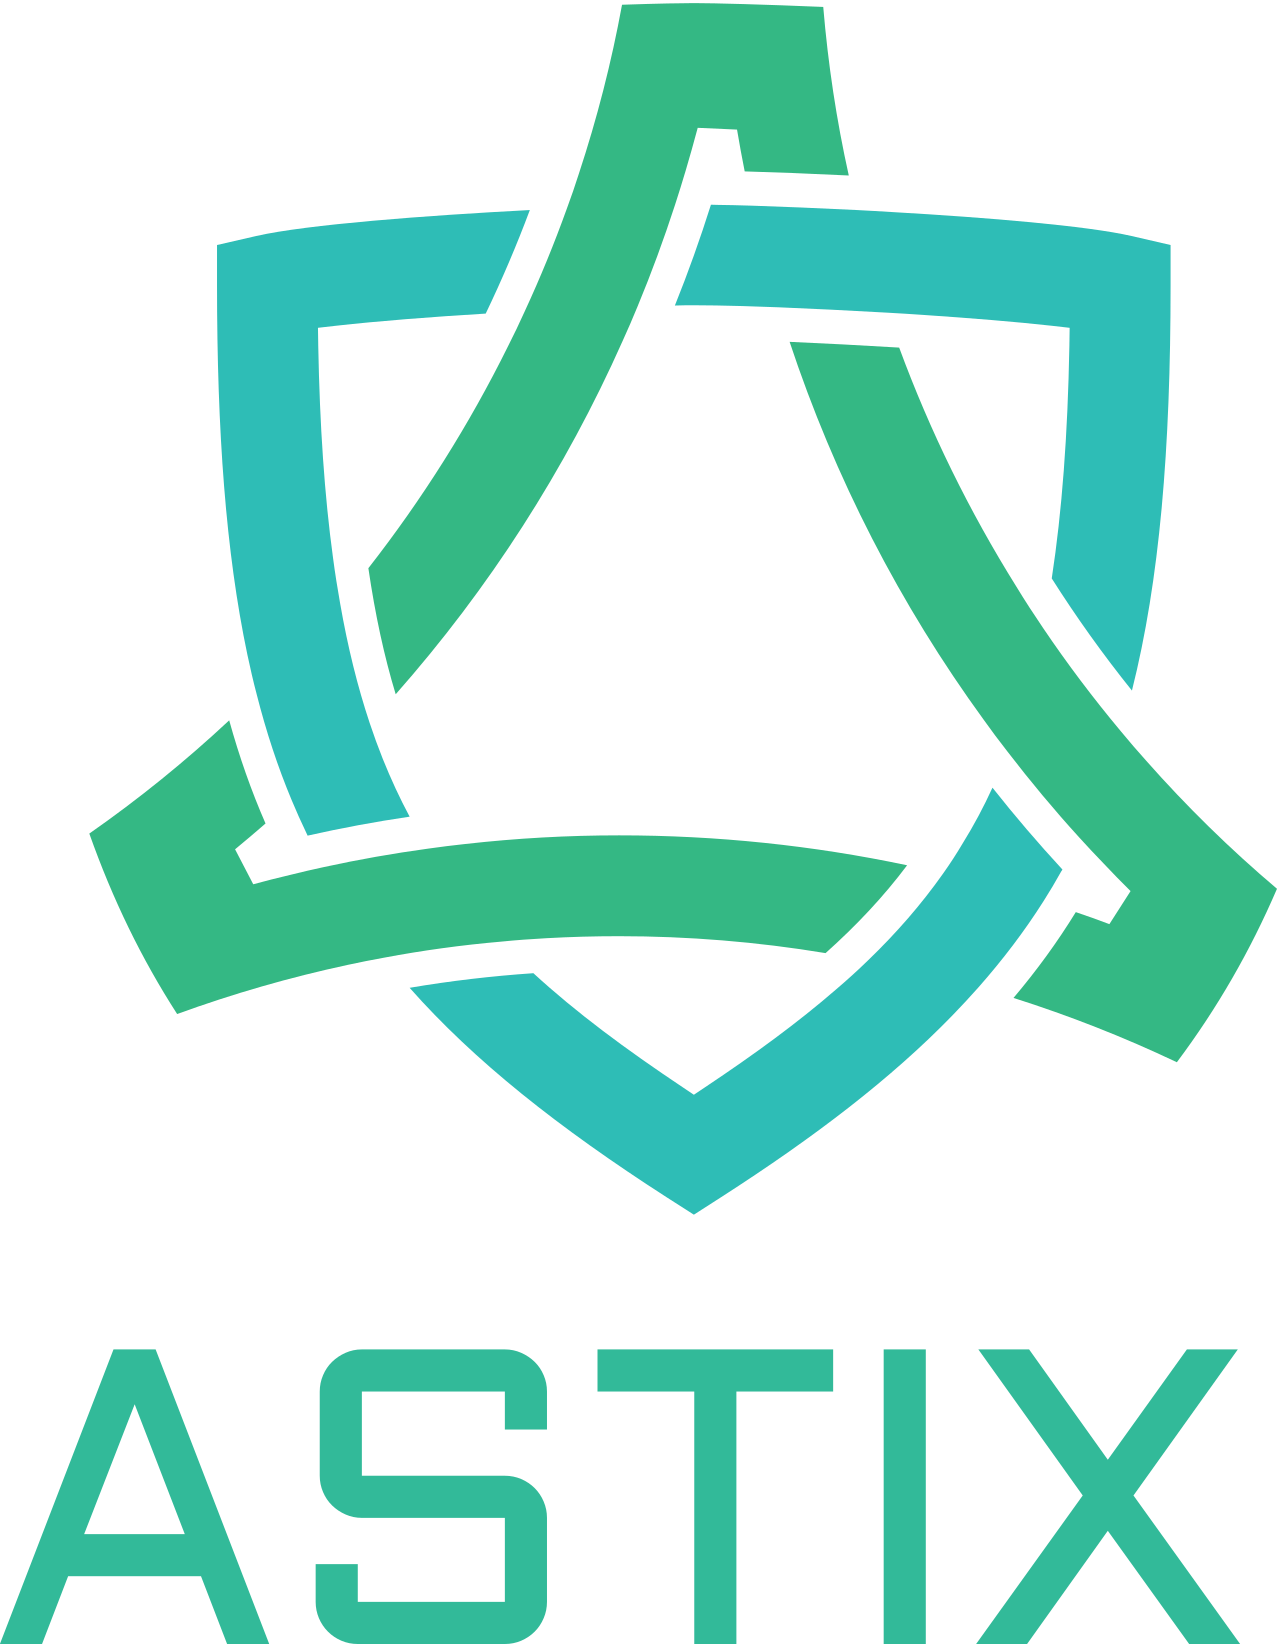 ASTIX 's web page